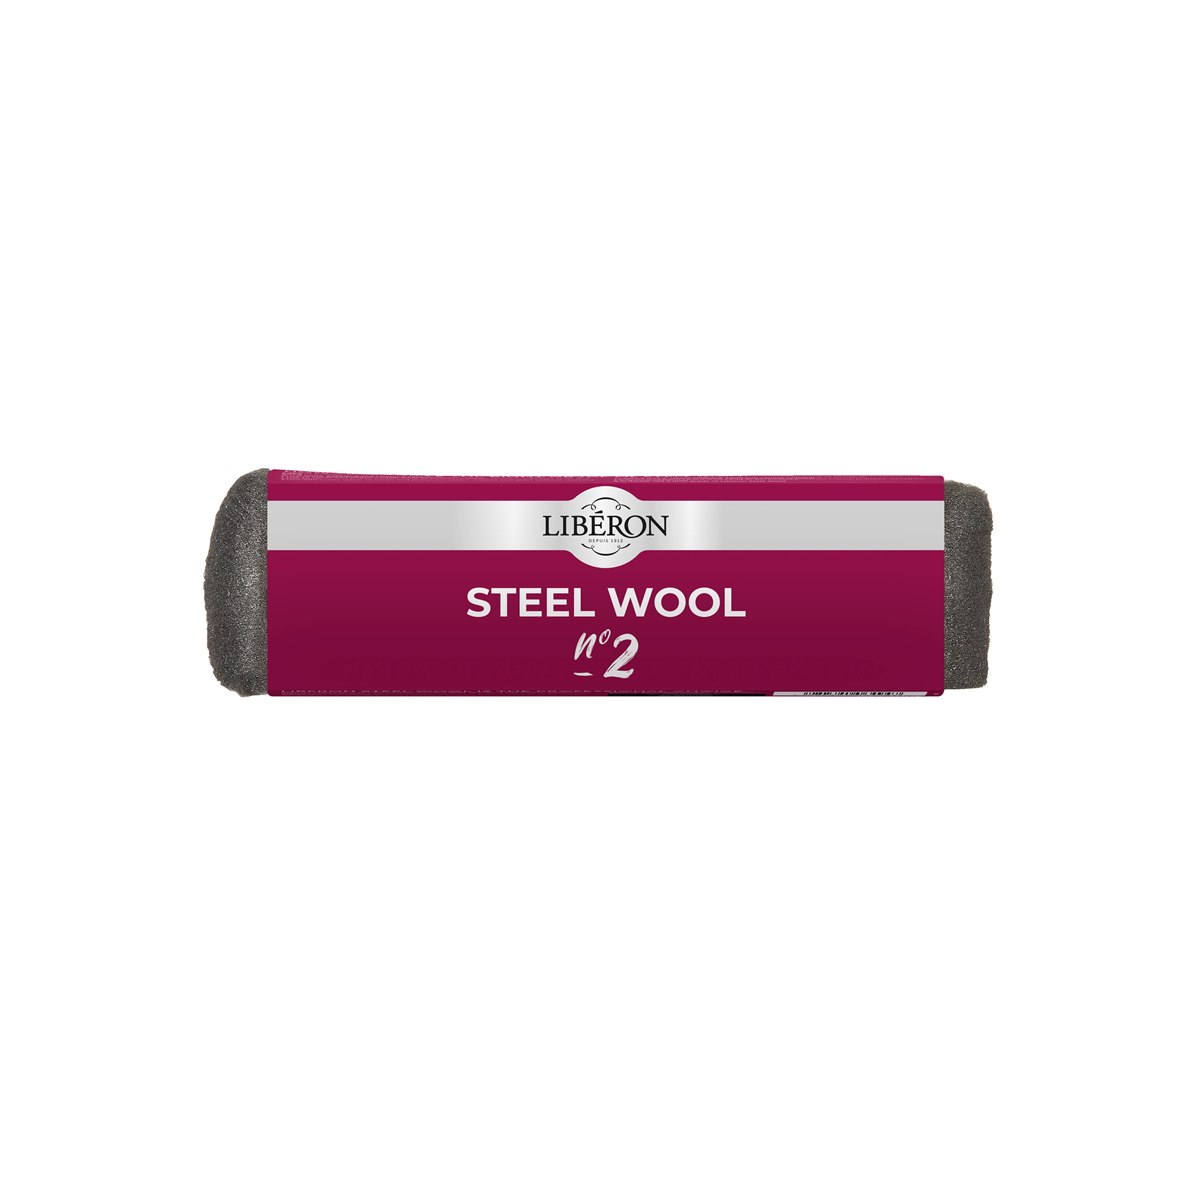 Liberon Steel Wool Medium (Grade 2) 100g